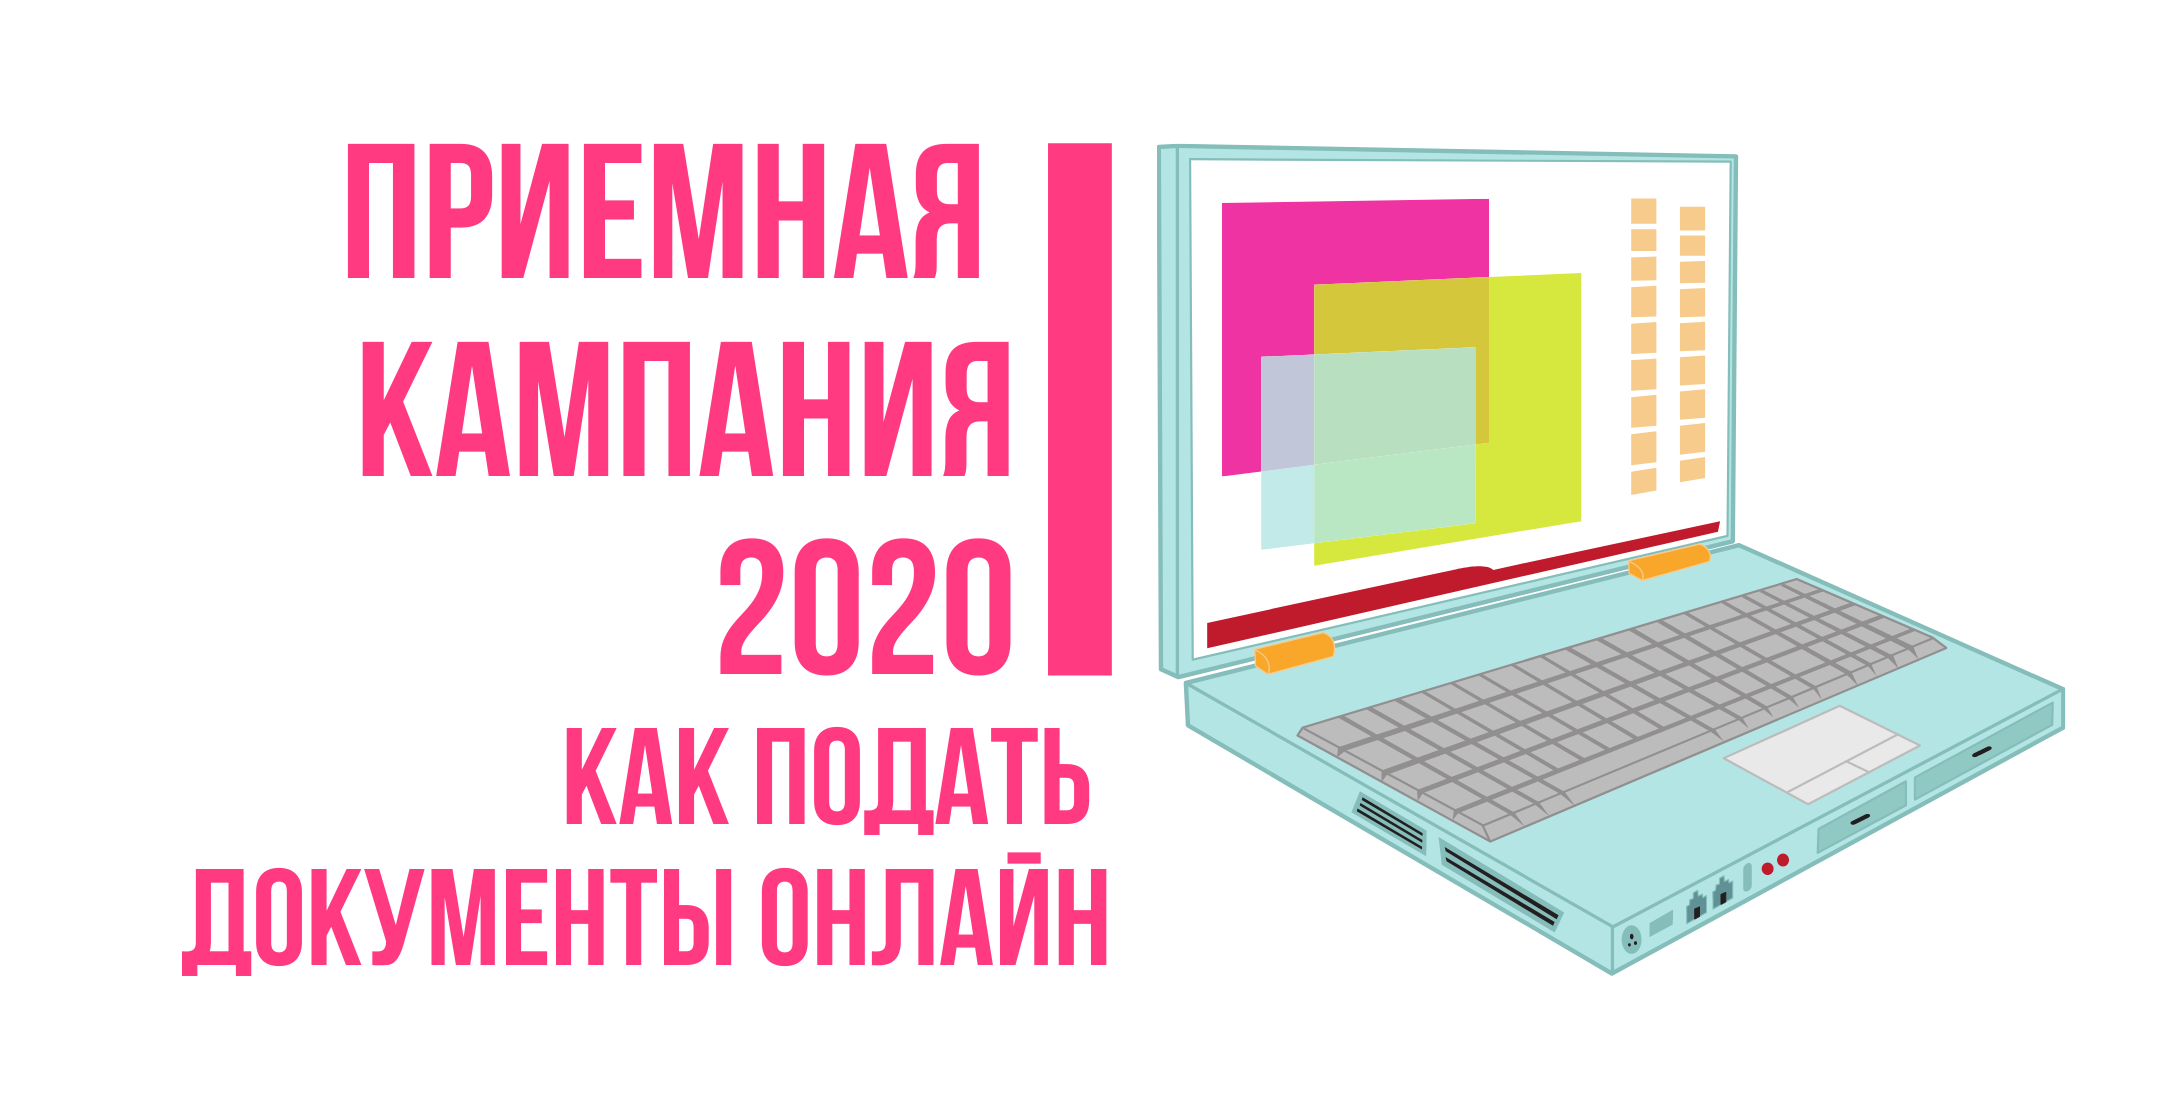 Приемная кампания 2020 – Правила подачи документов онлайн